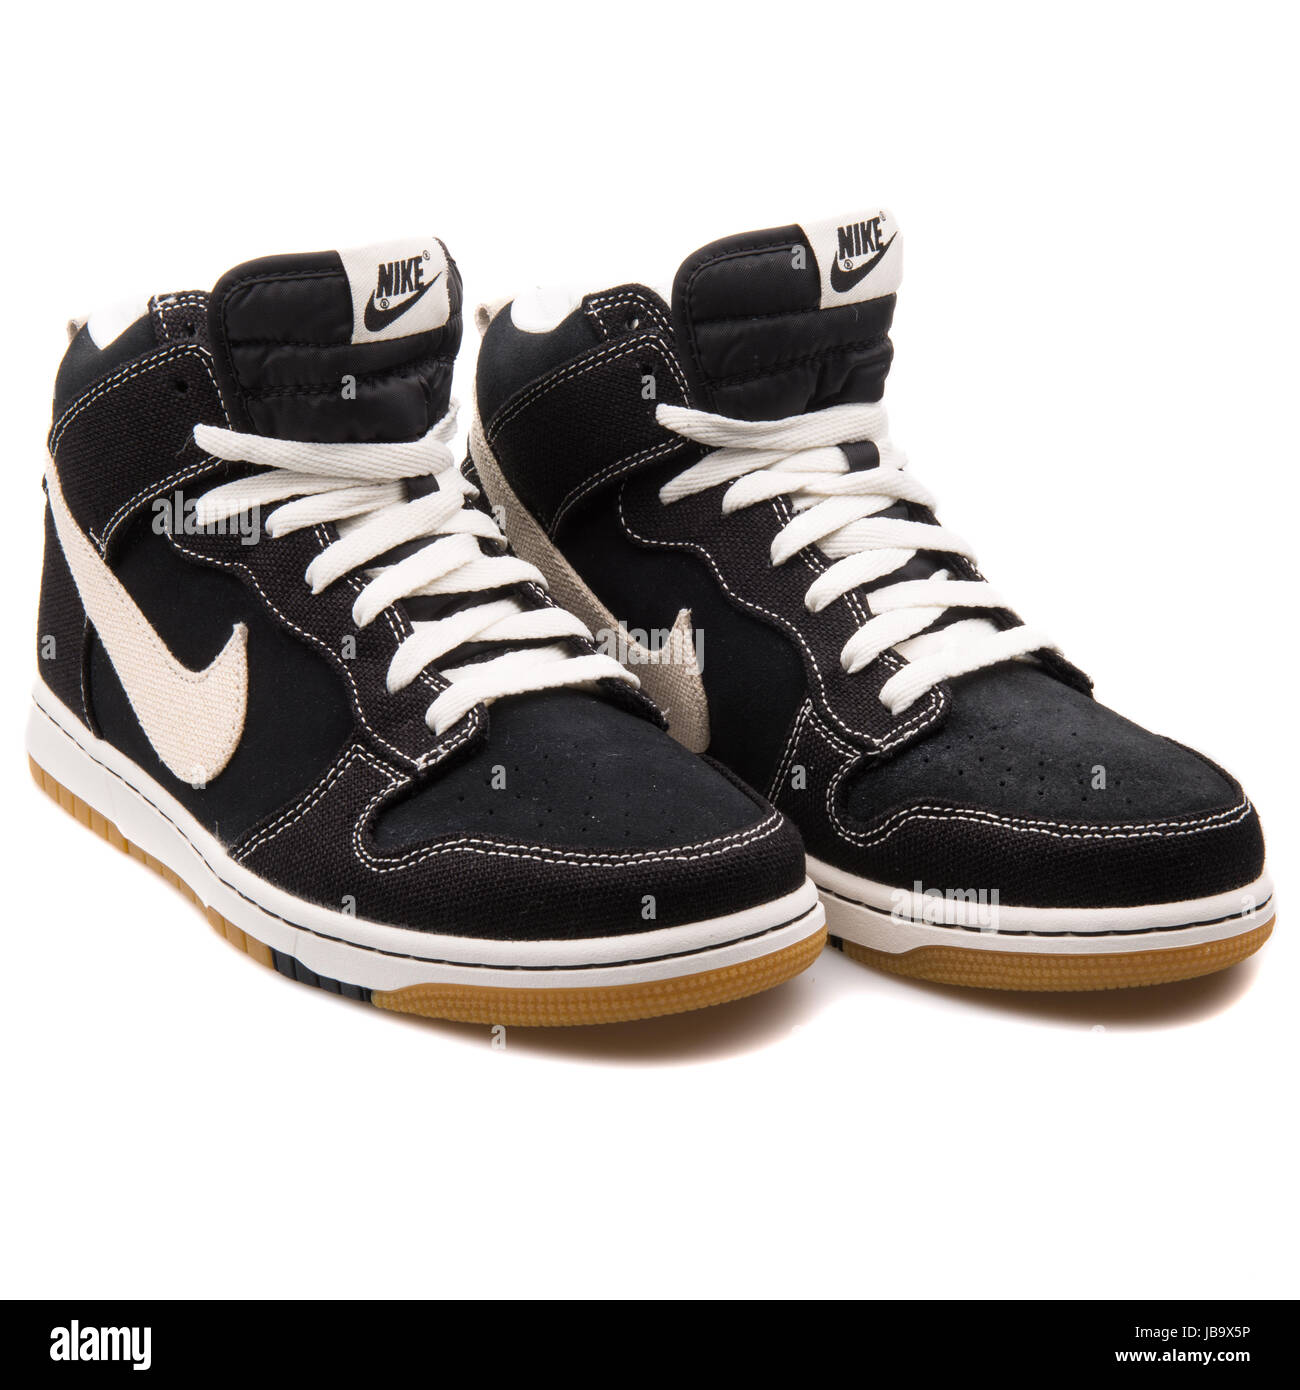 Nike Dunk CMFT Black Men's Basketball Retro Shoes - 705434-002